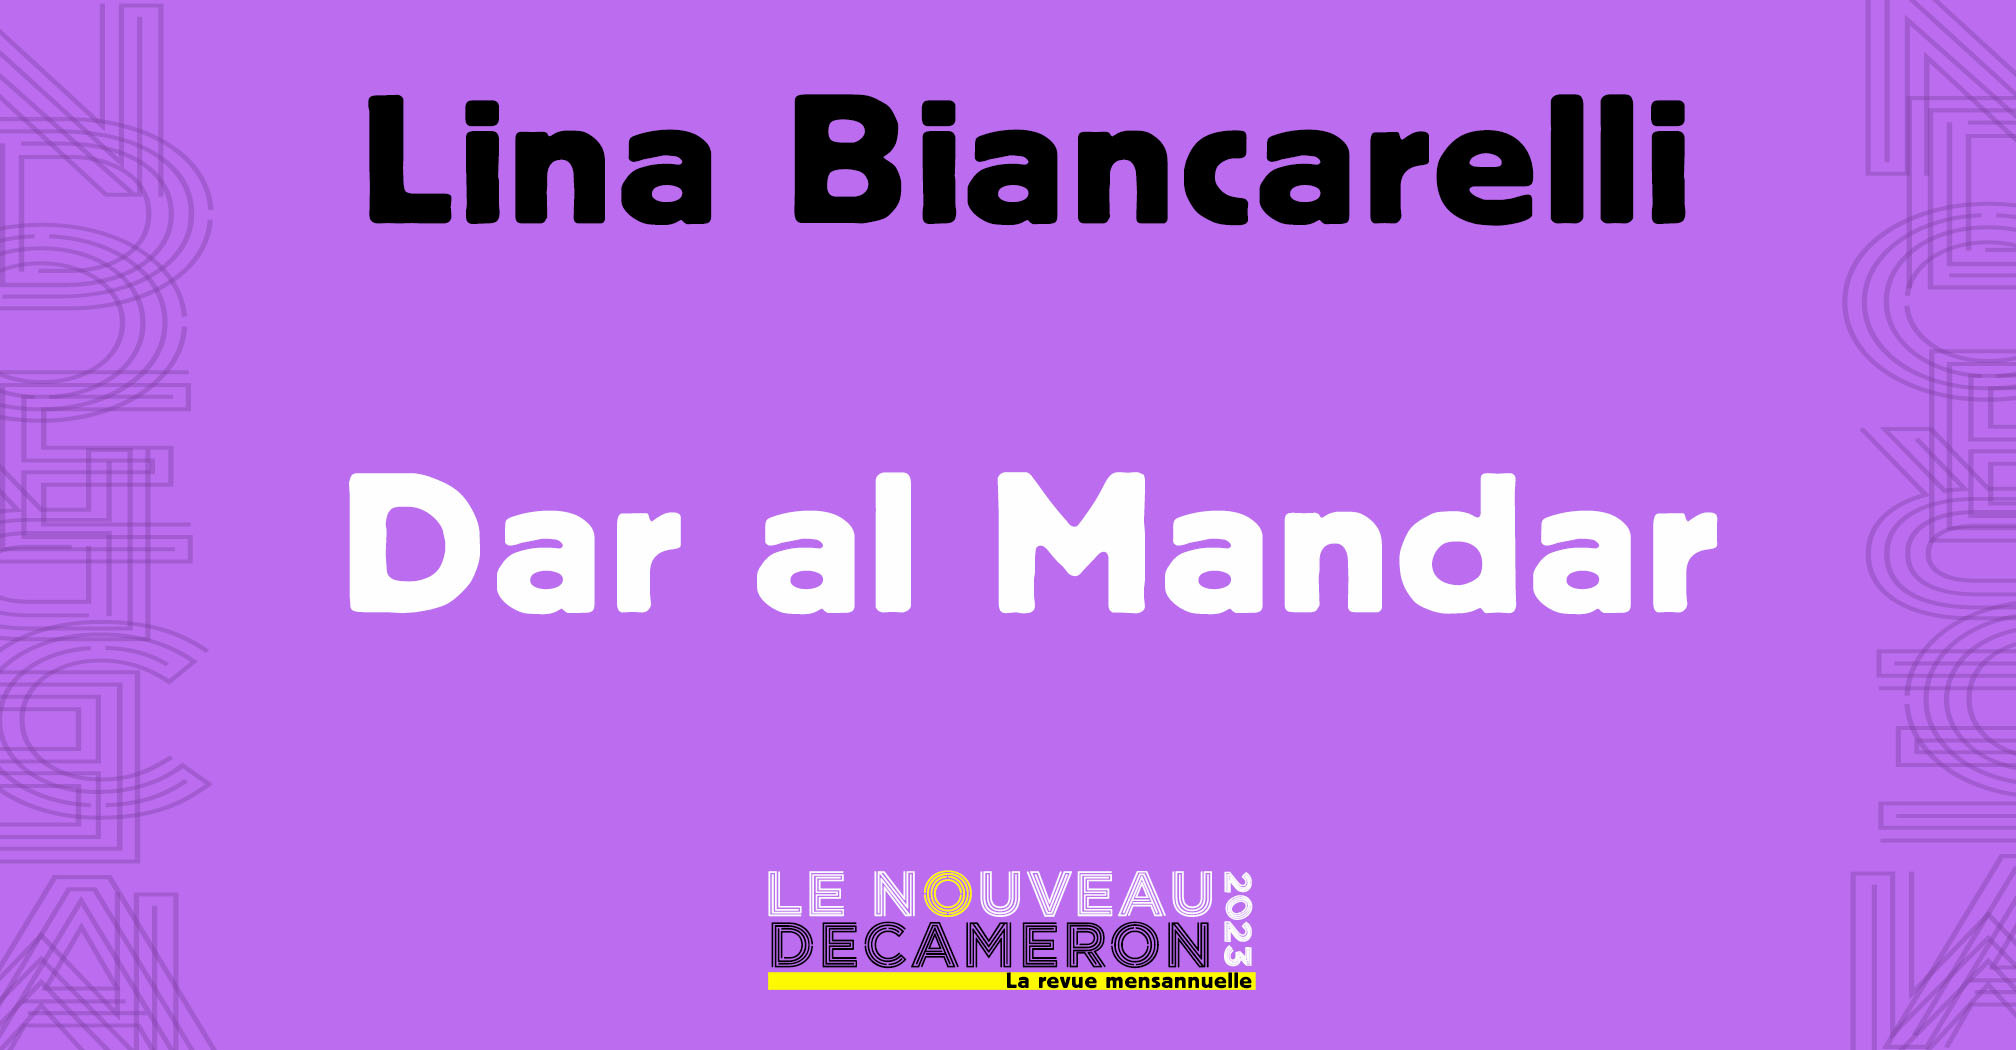 Lina Biancarelli - Dar al Mandar